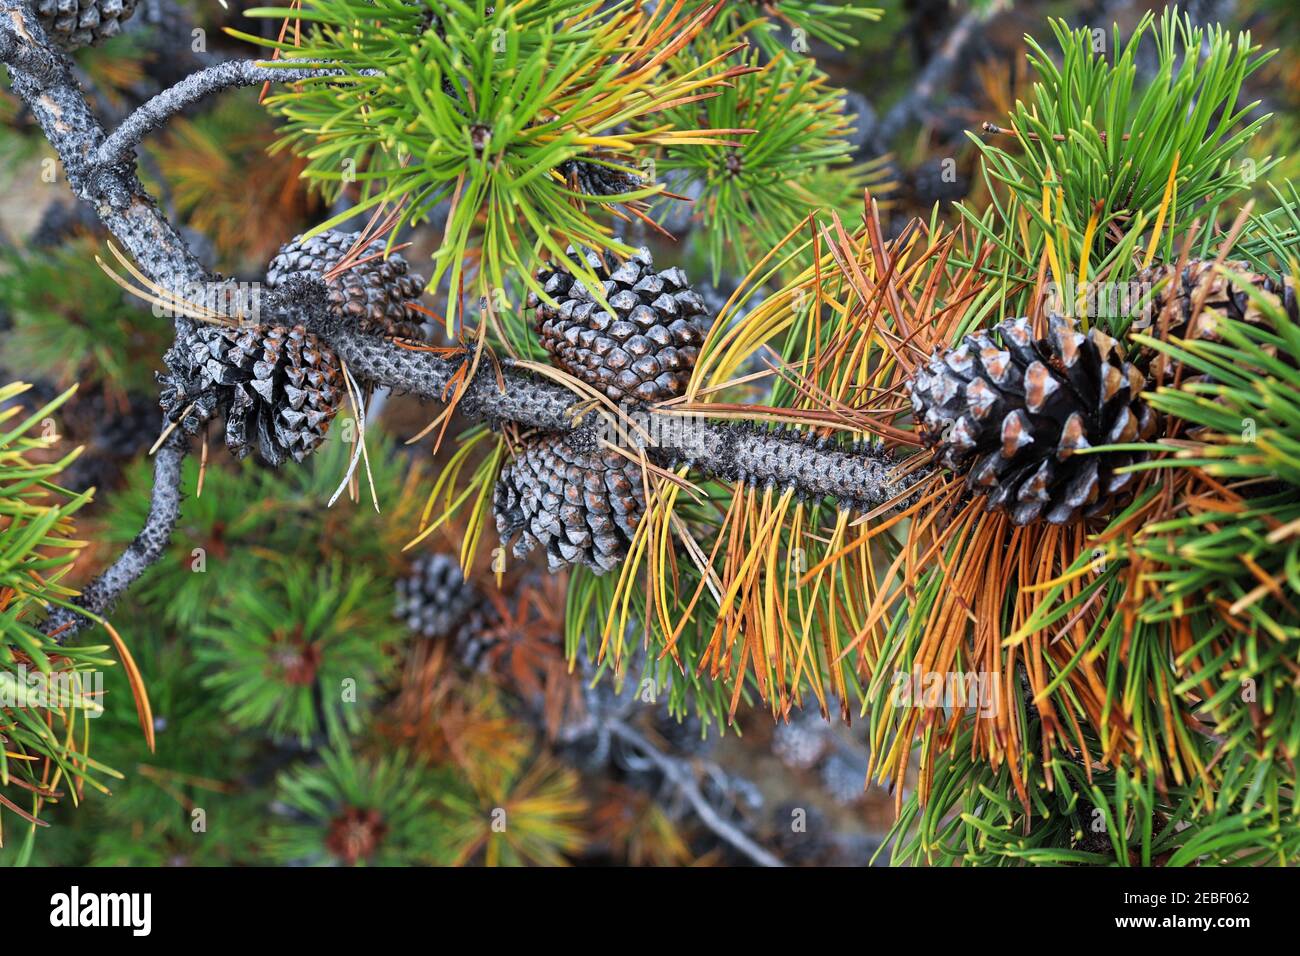 Closeup of pine cones on branches with orange needles Stock Photo